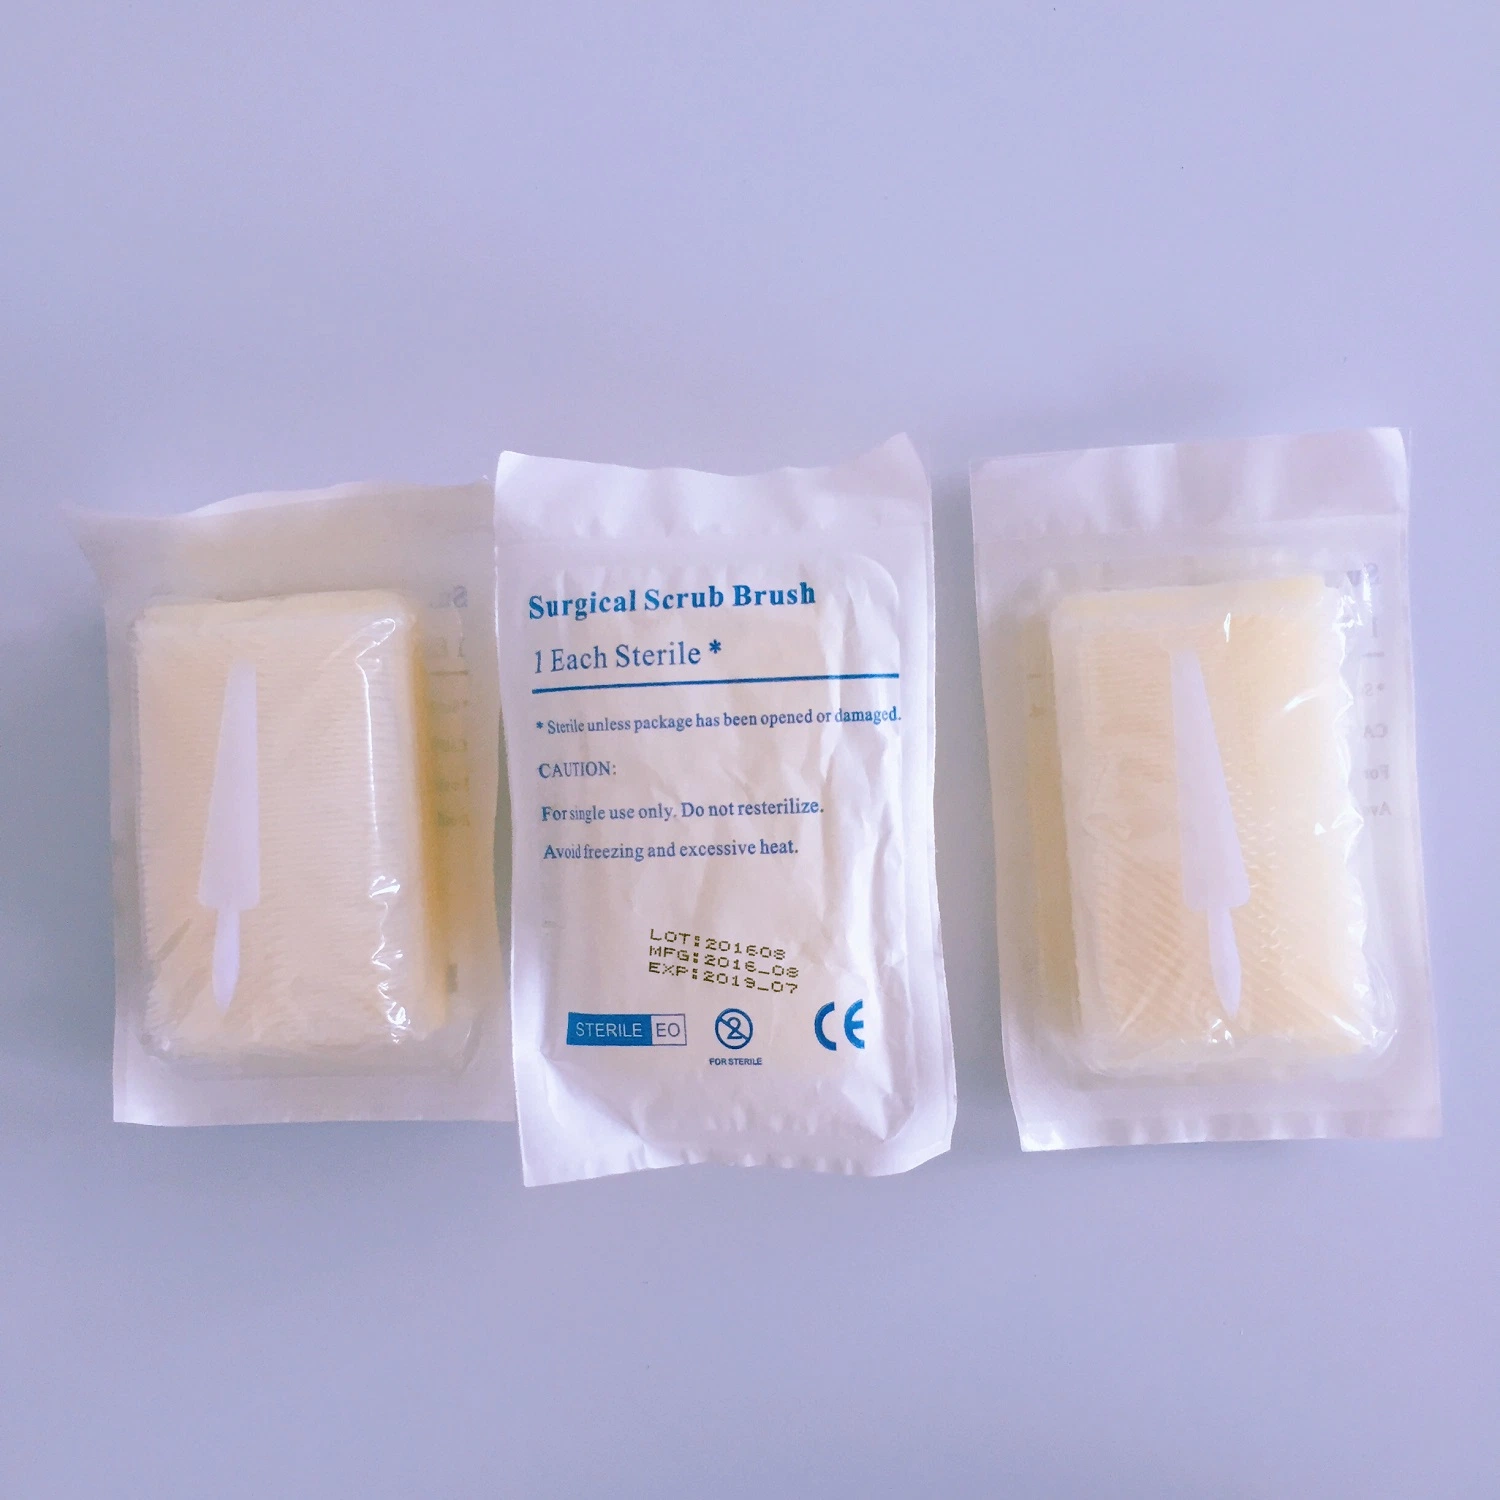 Surgical Scrub Brush Sterile Dry Chlorhexidine Gluconate Solution Povidone Iodine